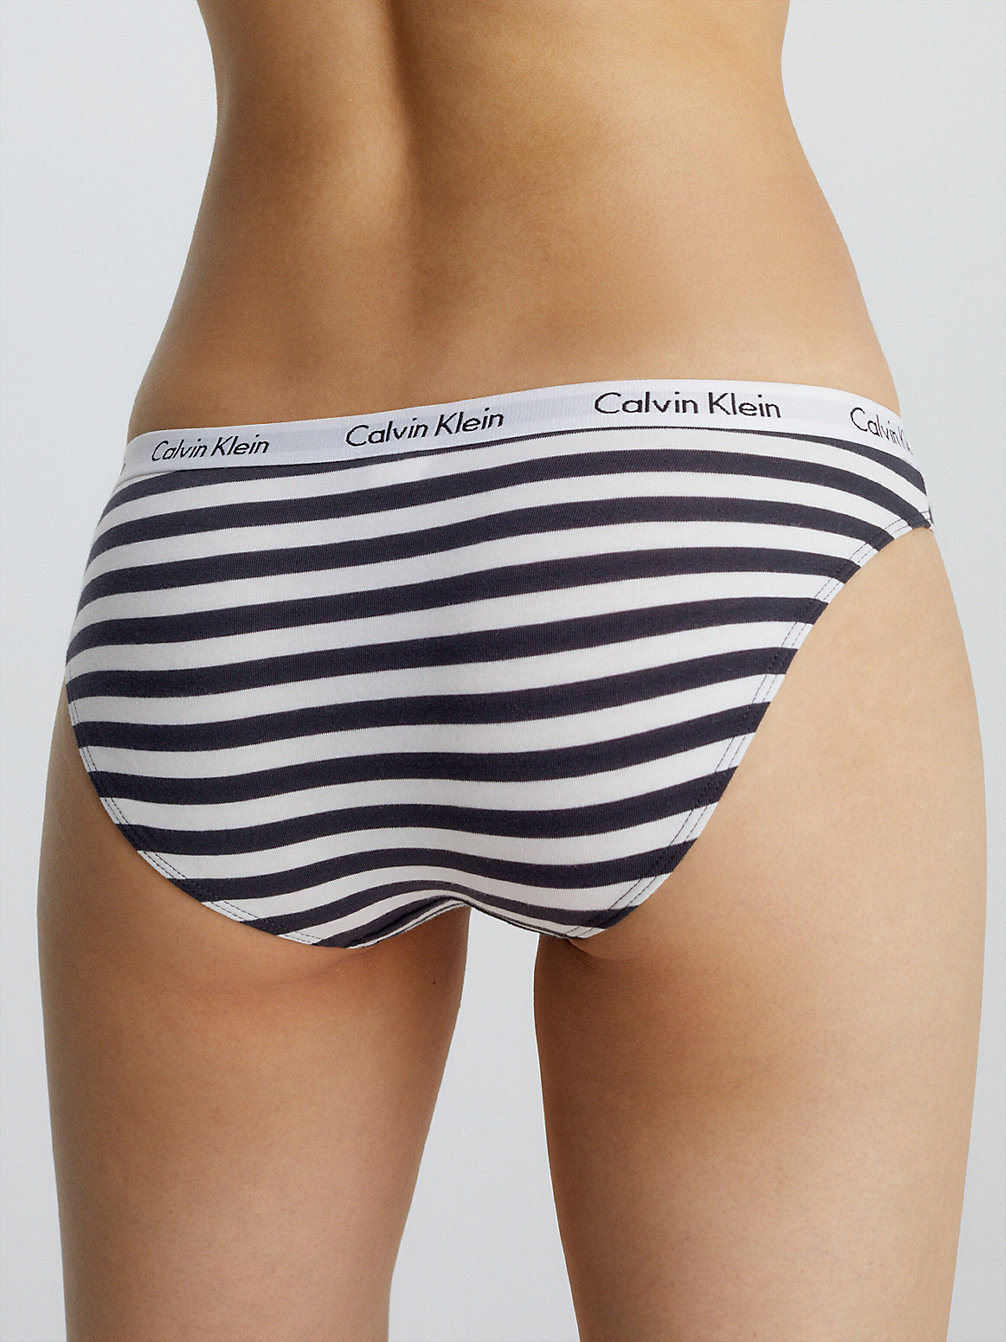 RAINER/BLUE GRAPHITE Slips - Carousel undefined Damen Calvin Klein